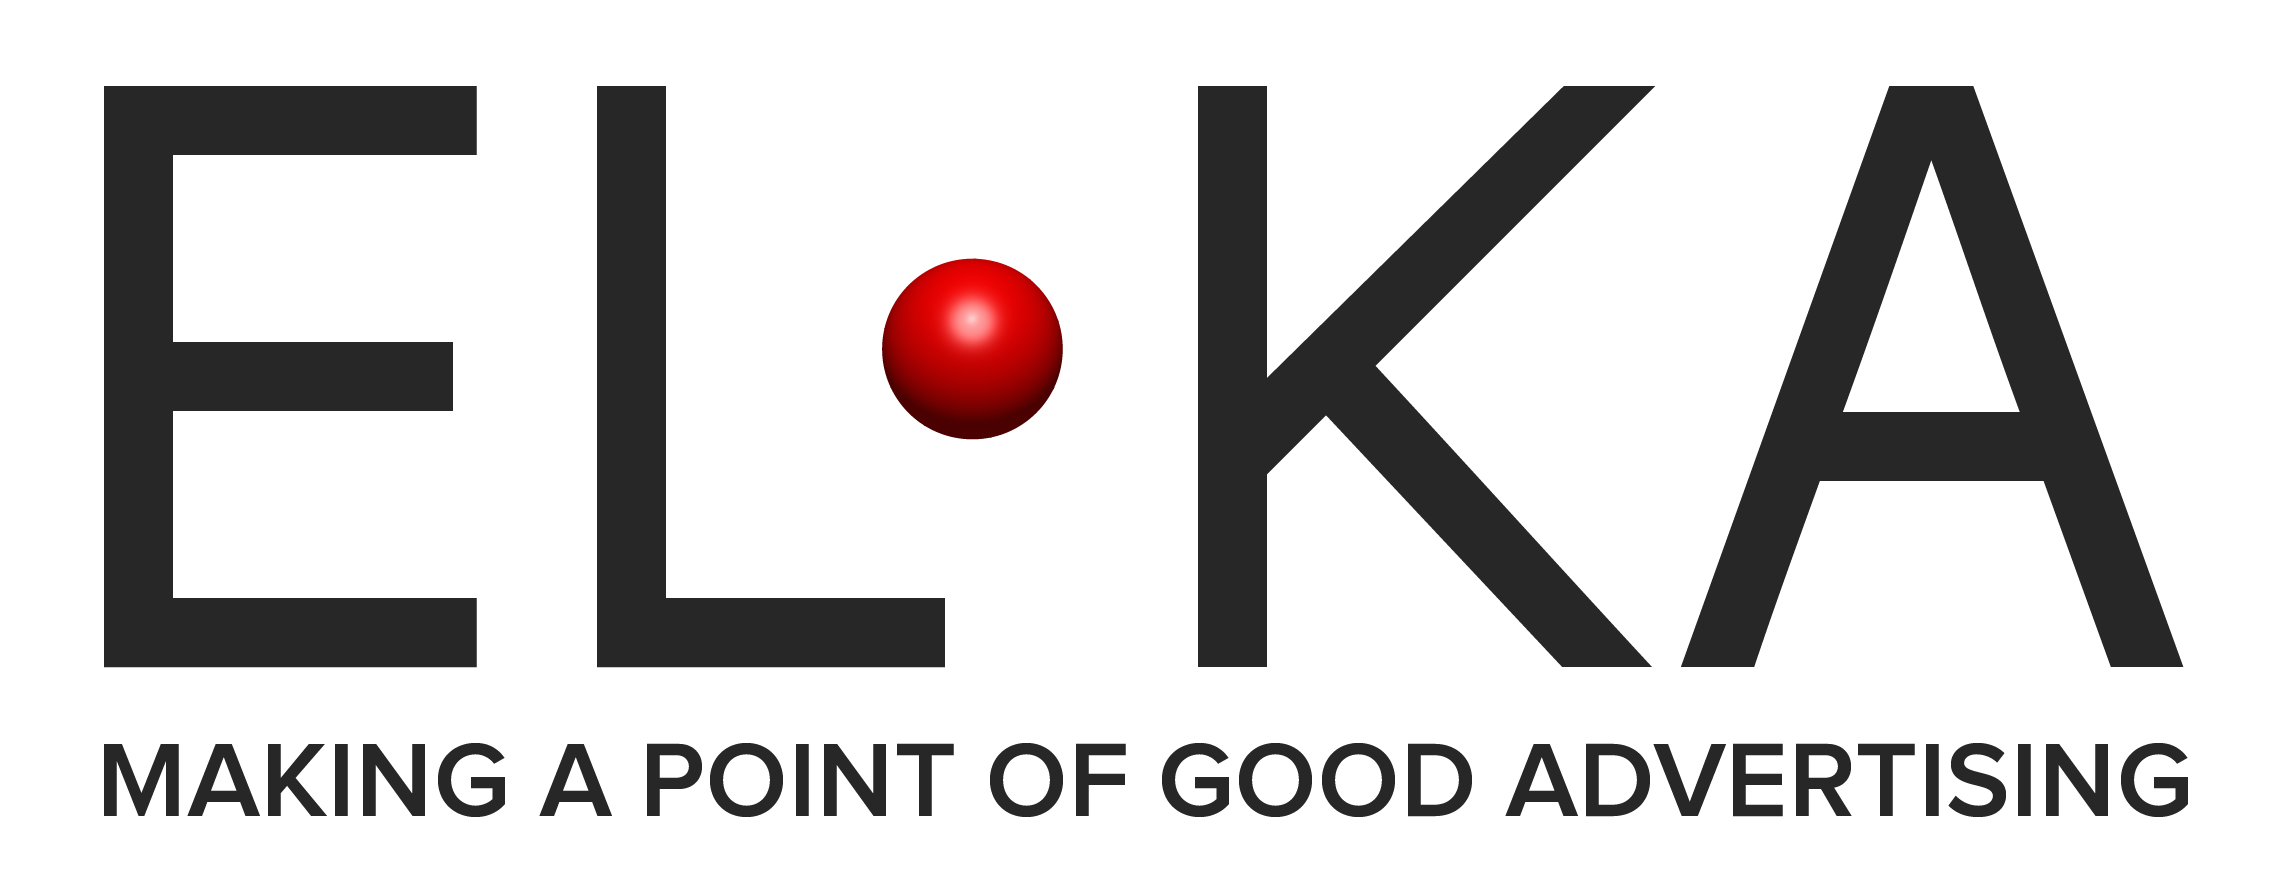 logo_positief